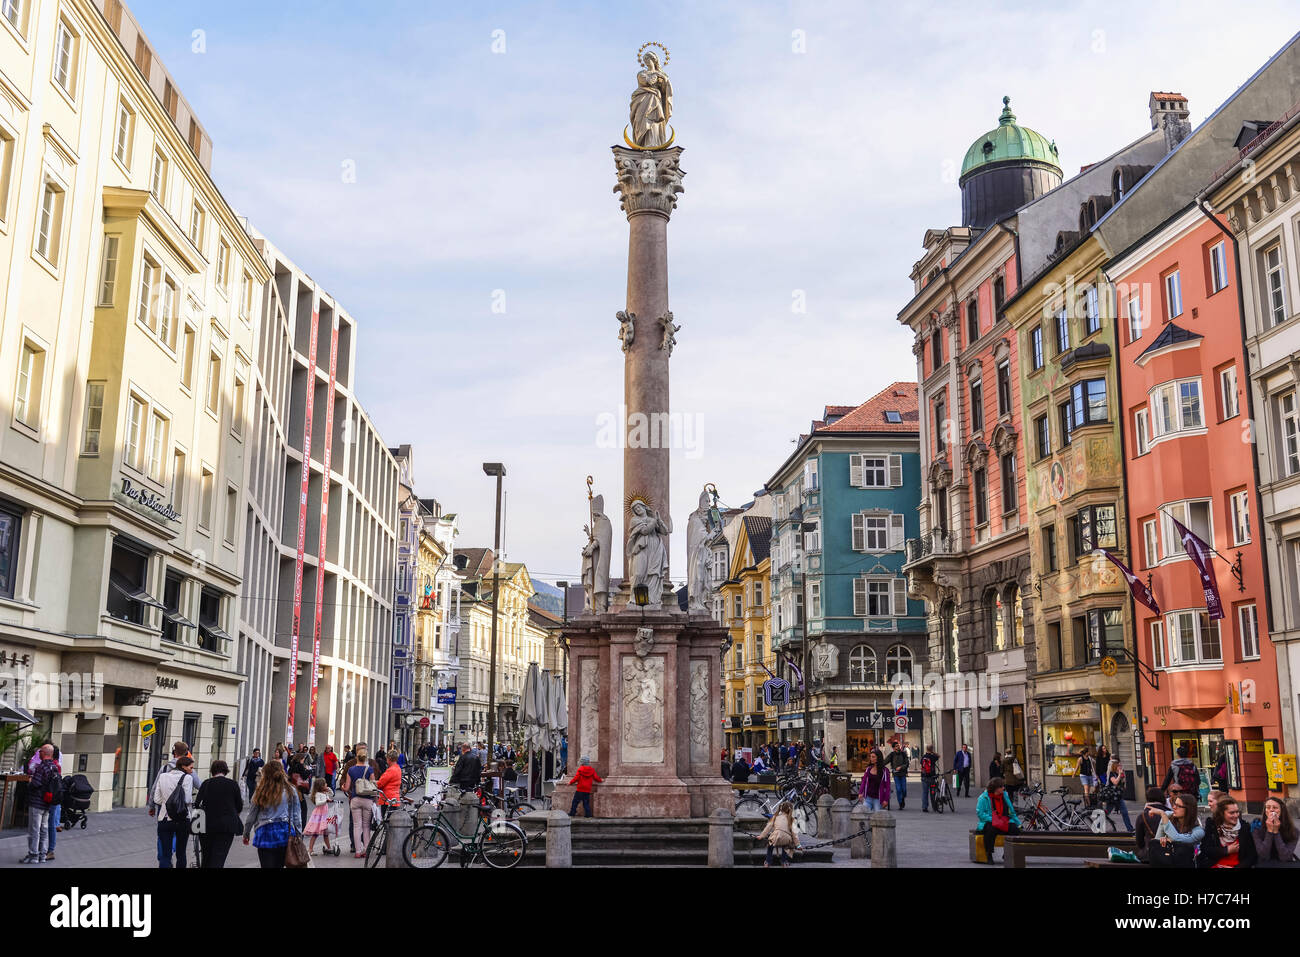 St. Anna's Column, Innsbruck, Austria Stock Photo